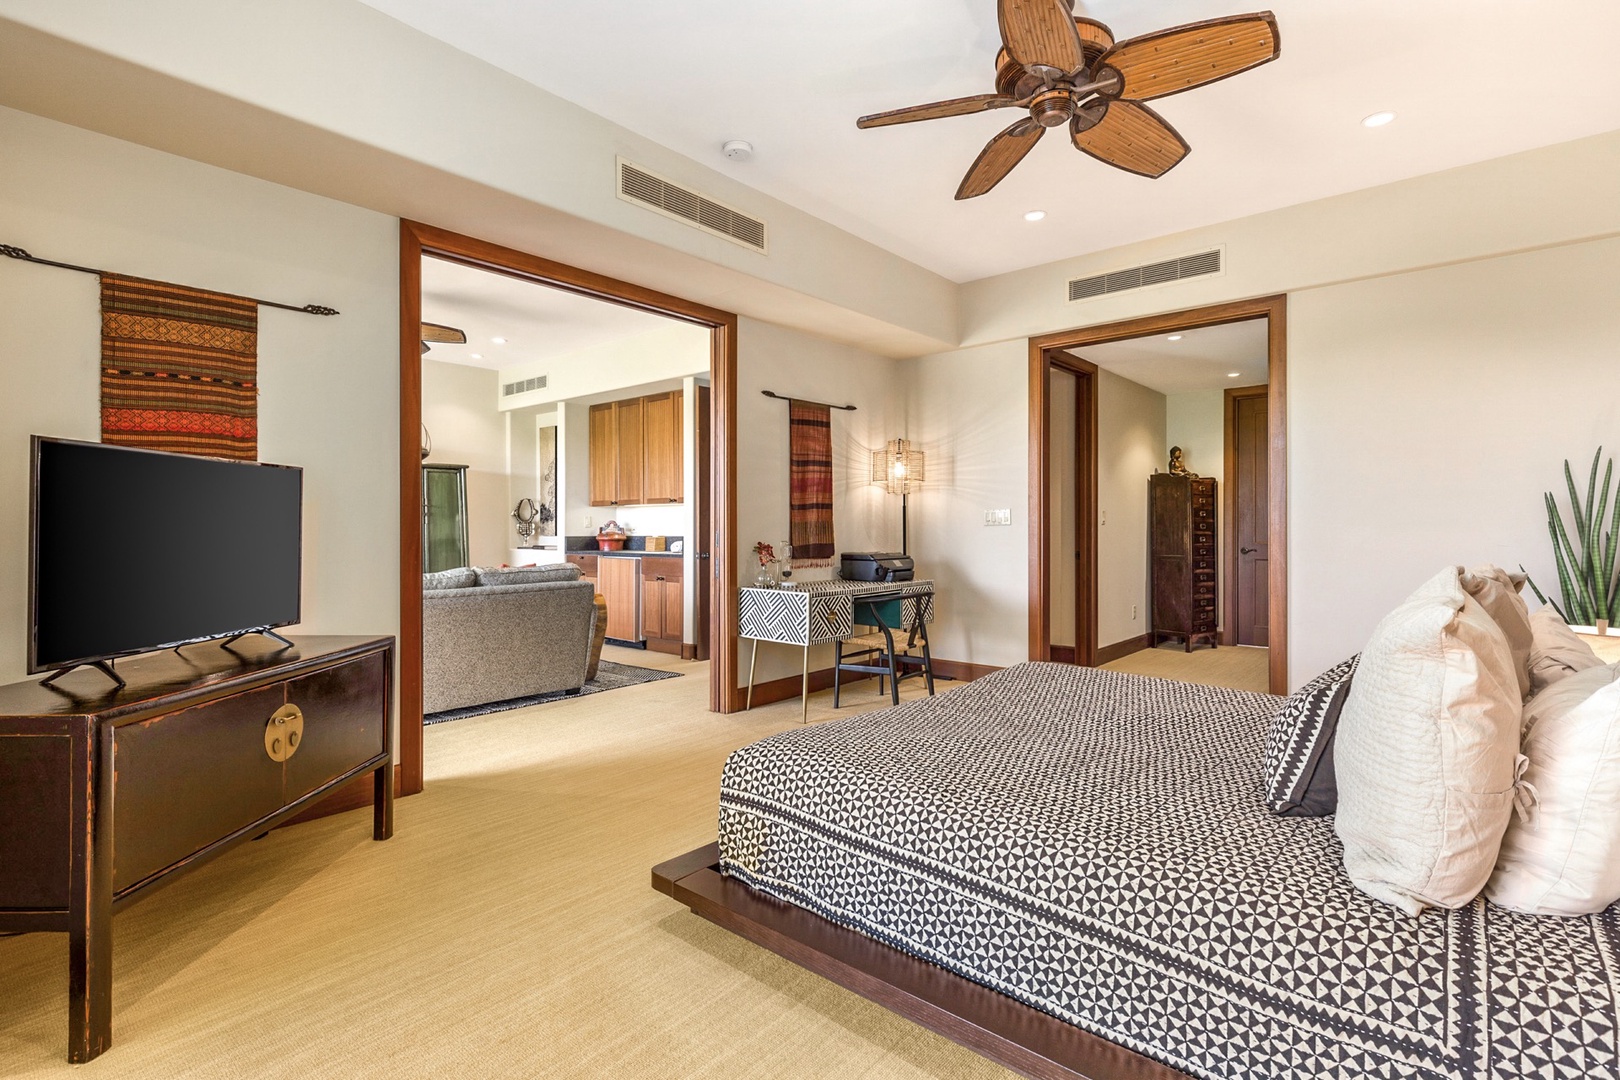 Kailua Kona Vacation Rentals, 3BD Ka'Ulu Villa (131C) at Four Seasons Resort at Hualalai - Alternate view of primary bedroom with sliding doors to bonus retreat room.